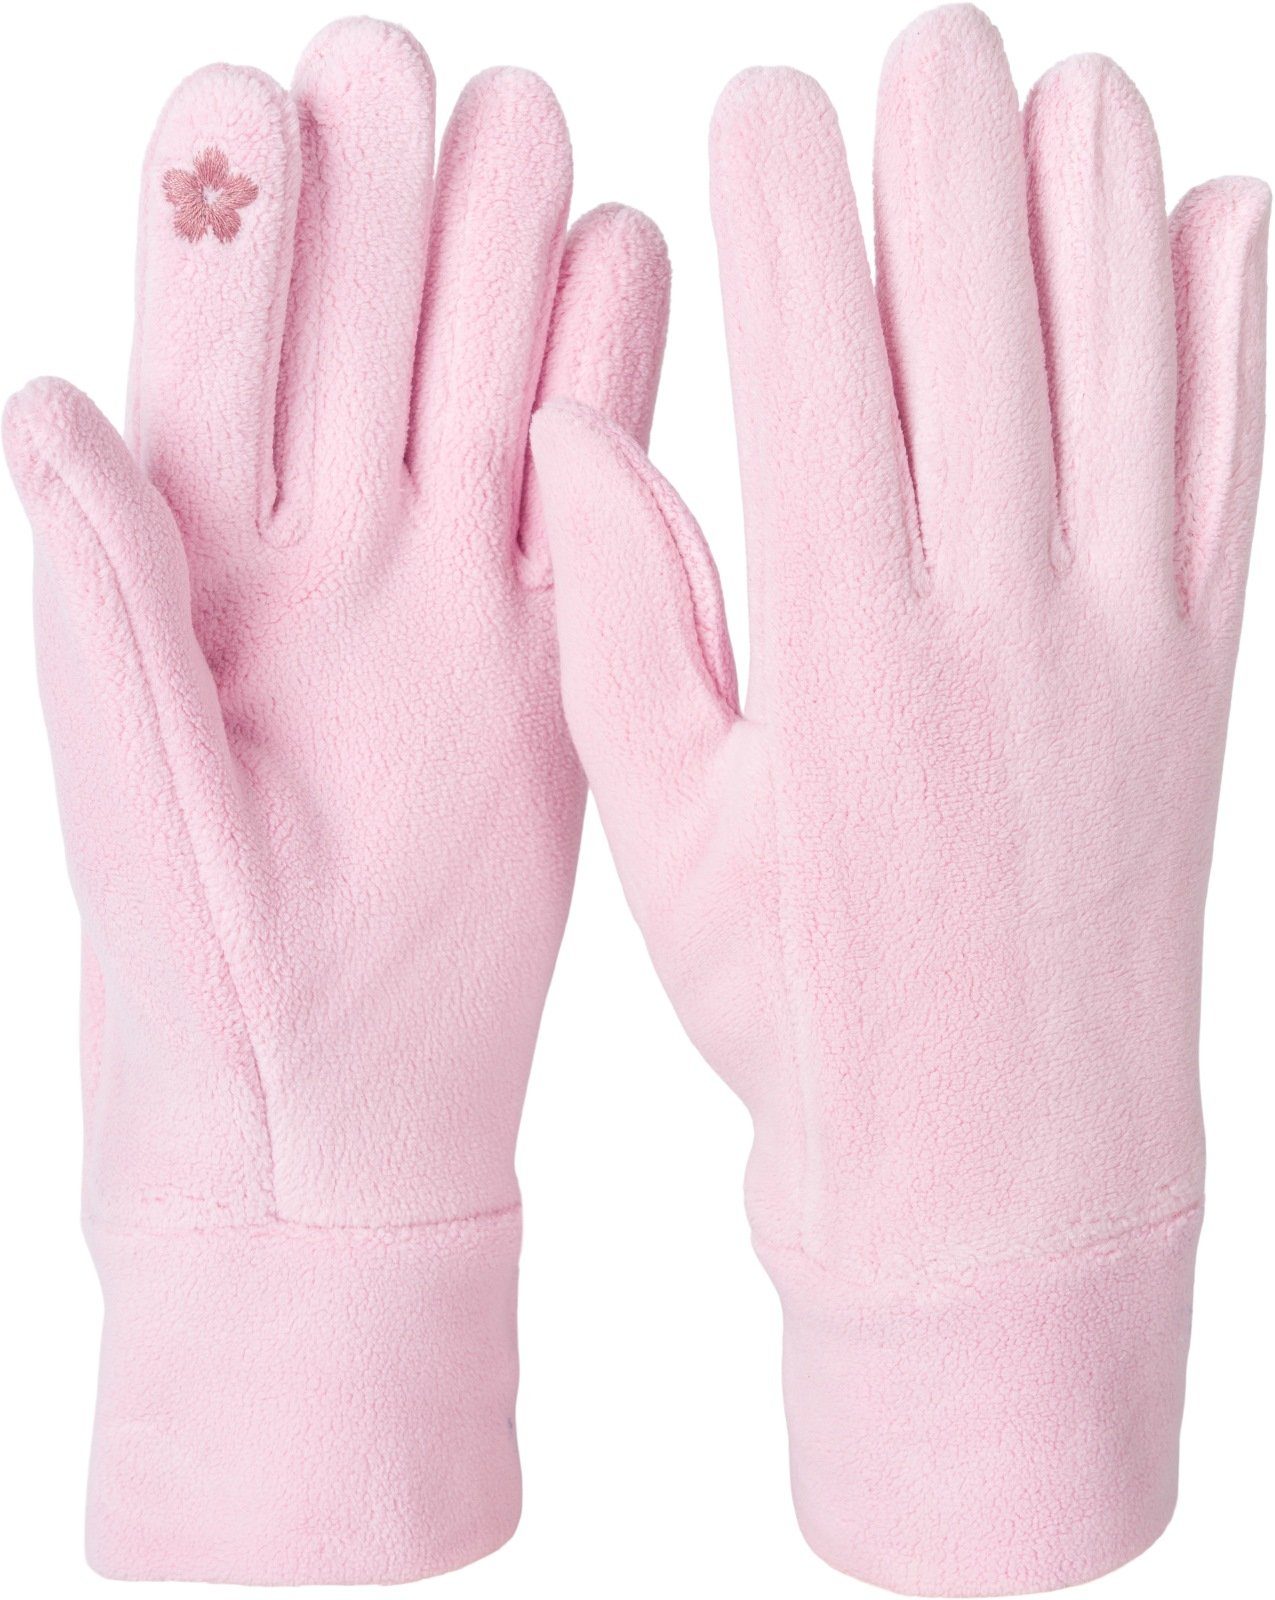 styleBREAKER Fleecehandschuhe Einfarbige Touchscreen Fleece Handschuhe Rose